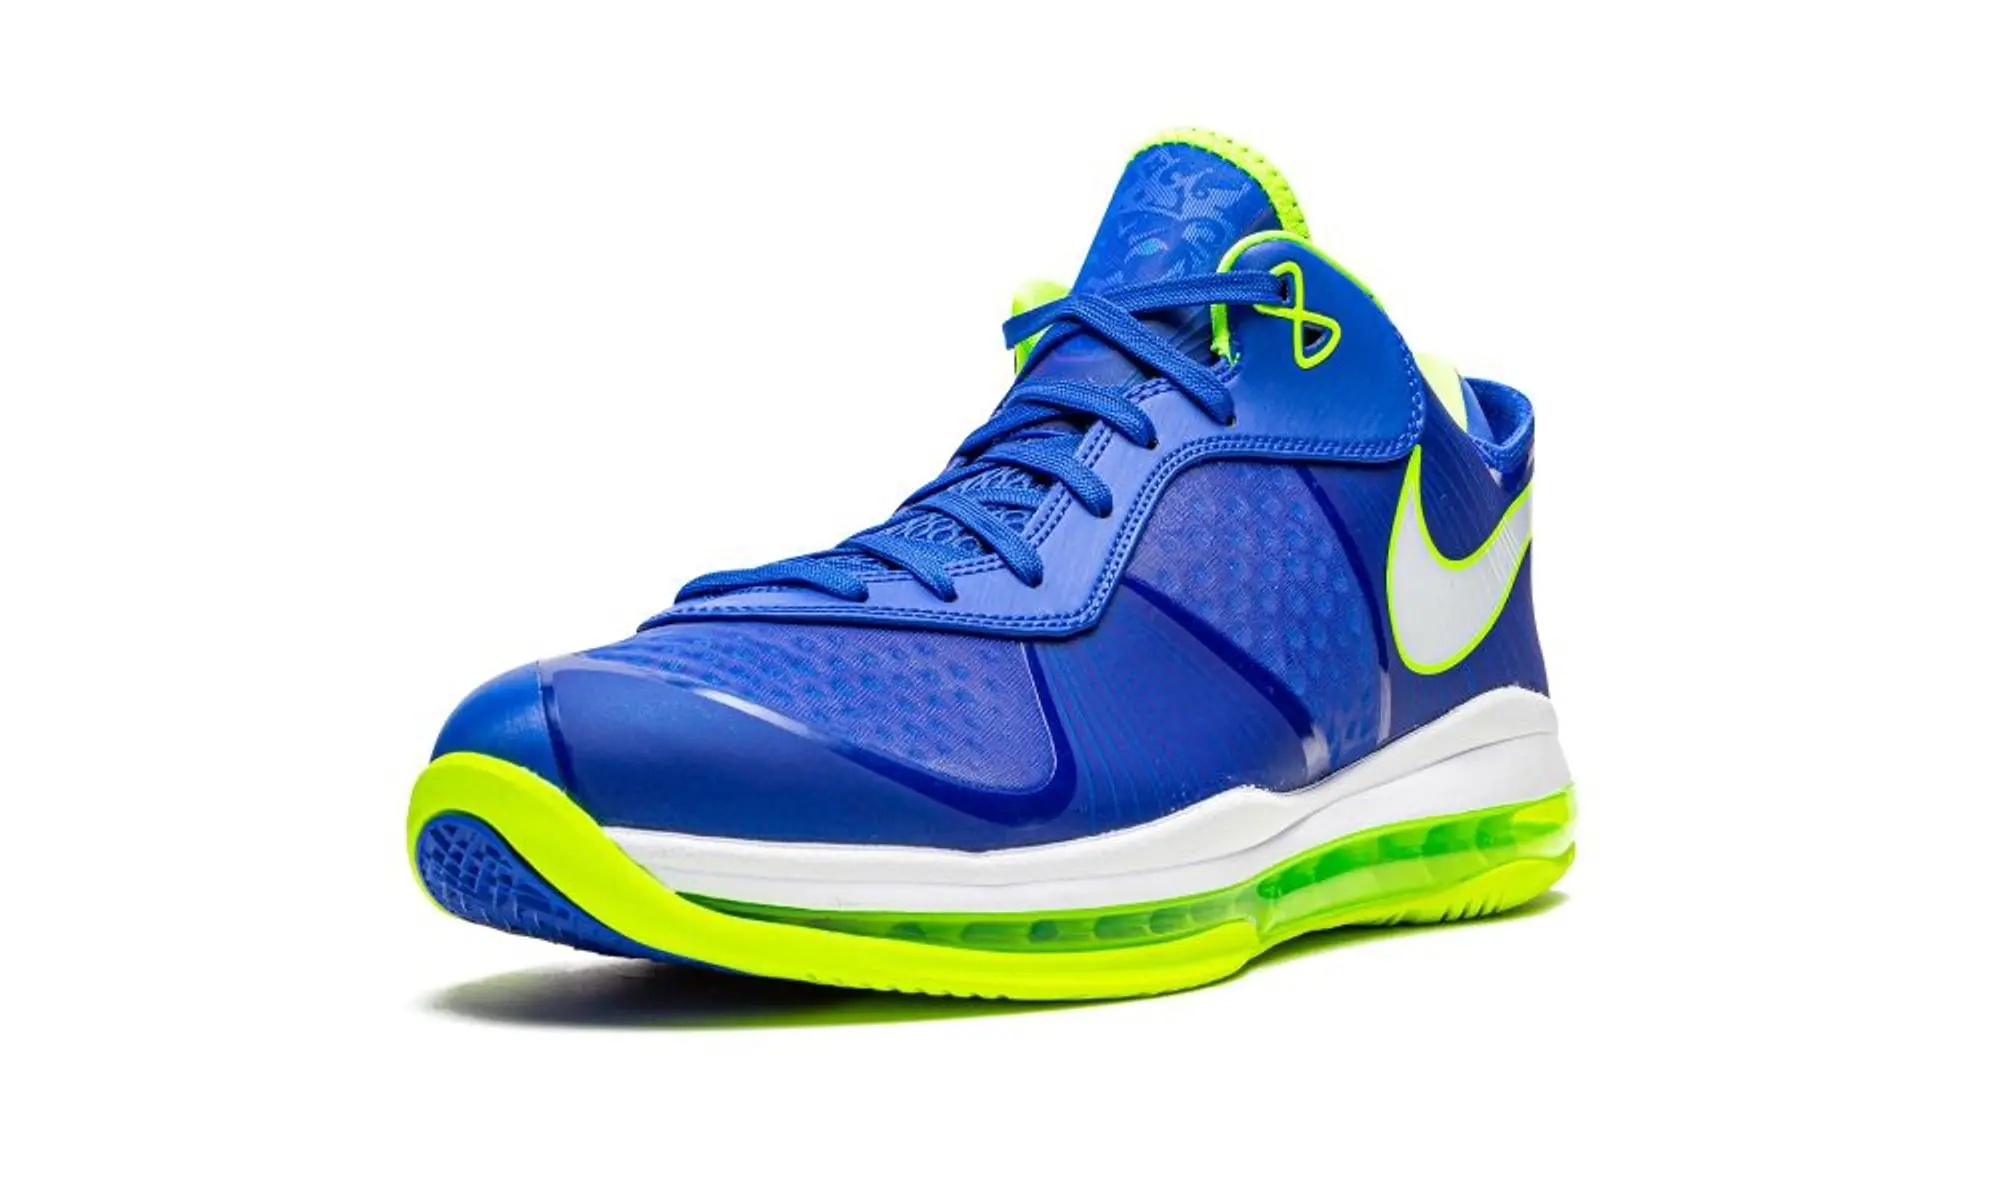 Men's Nike Lebron VIII - Blue, Blue